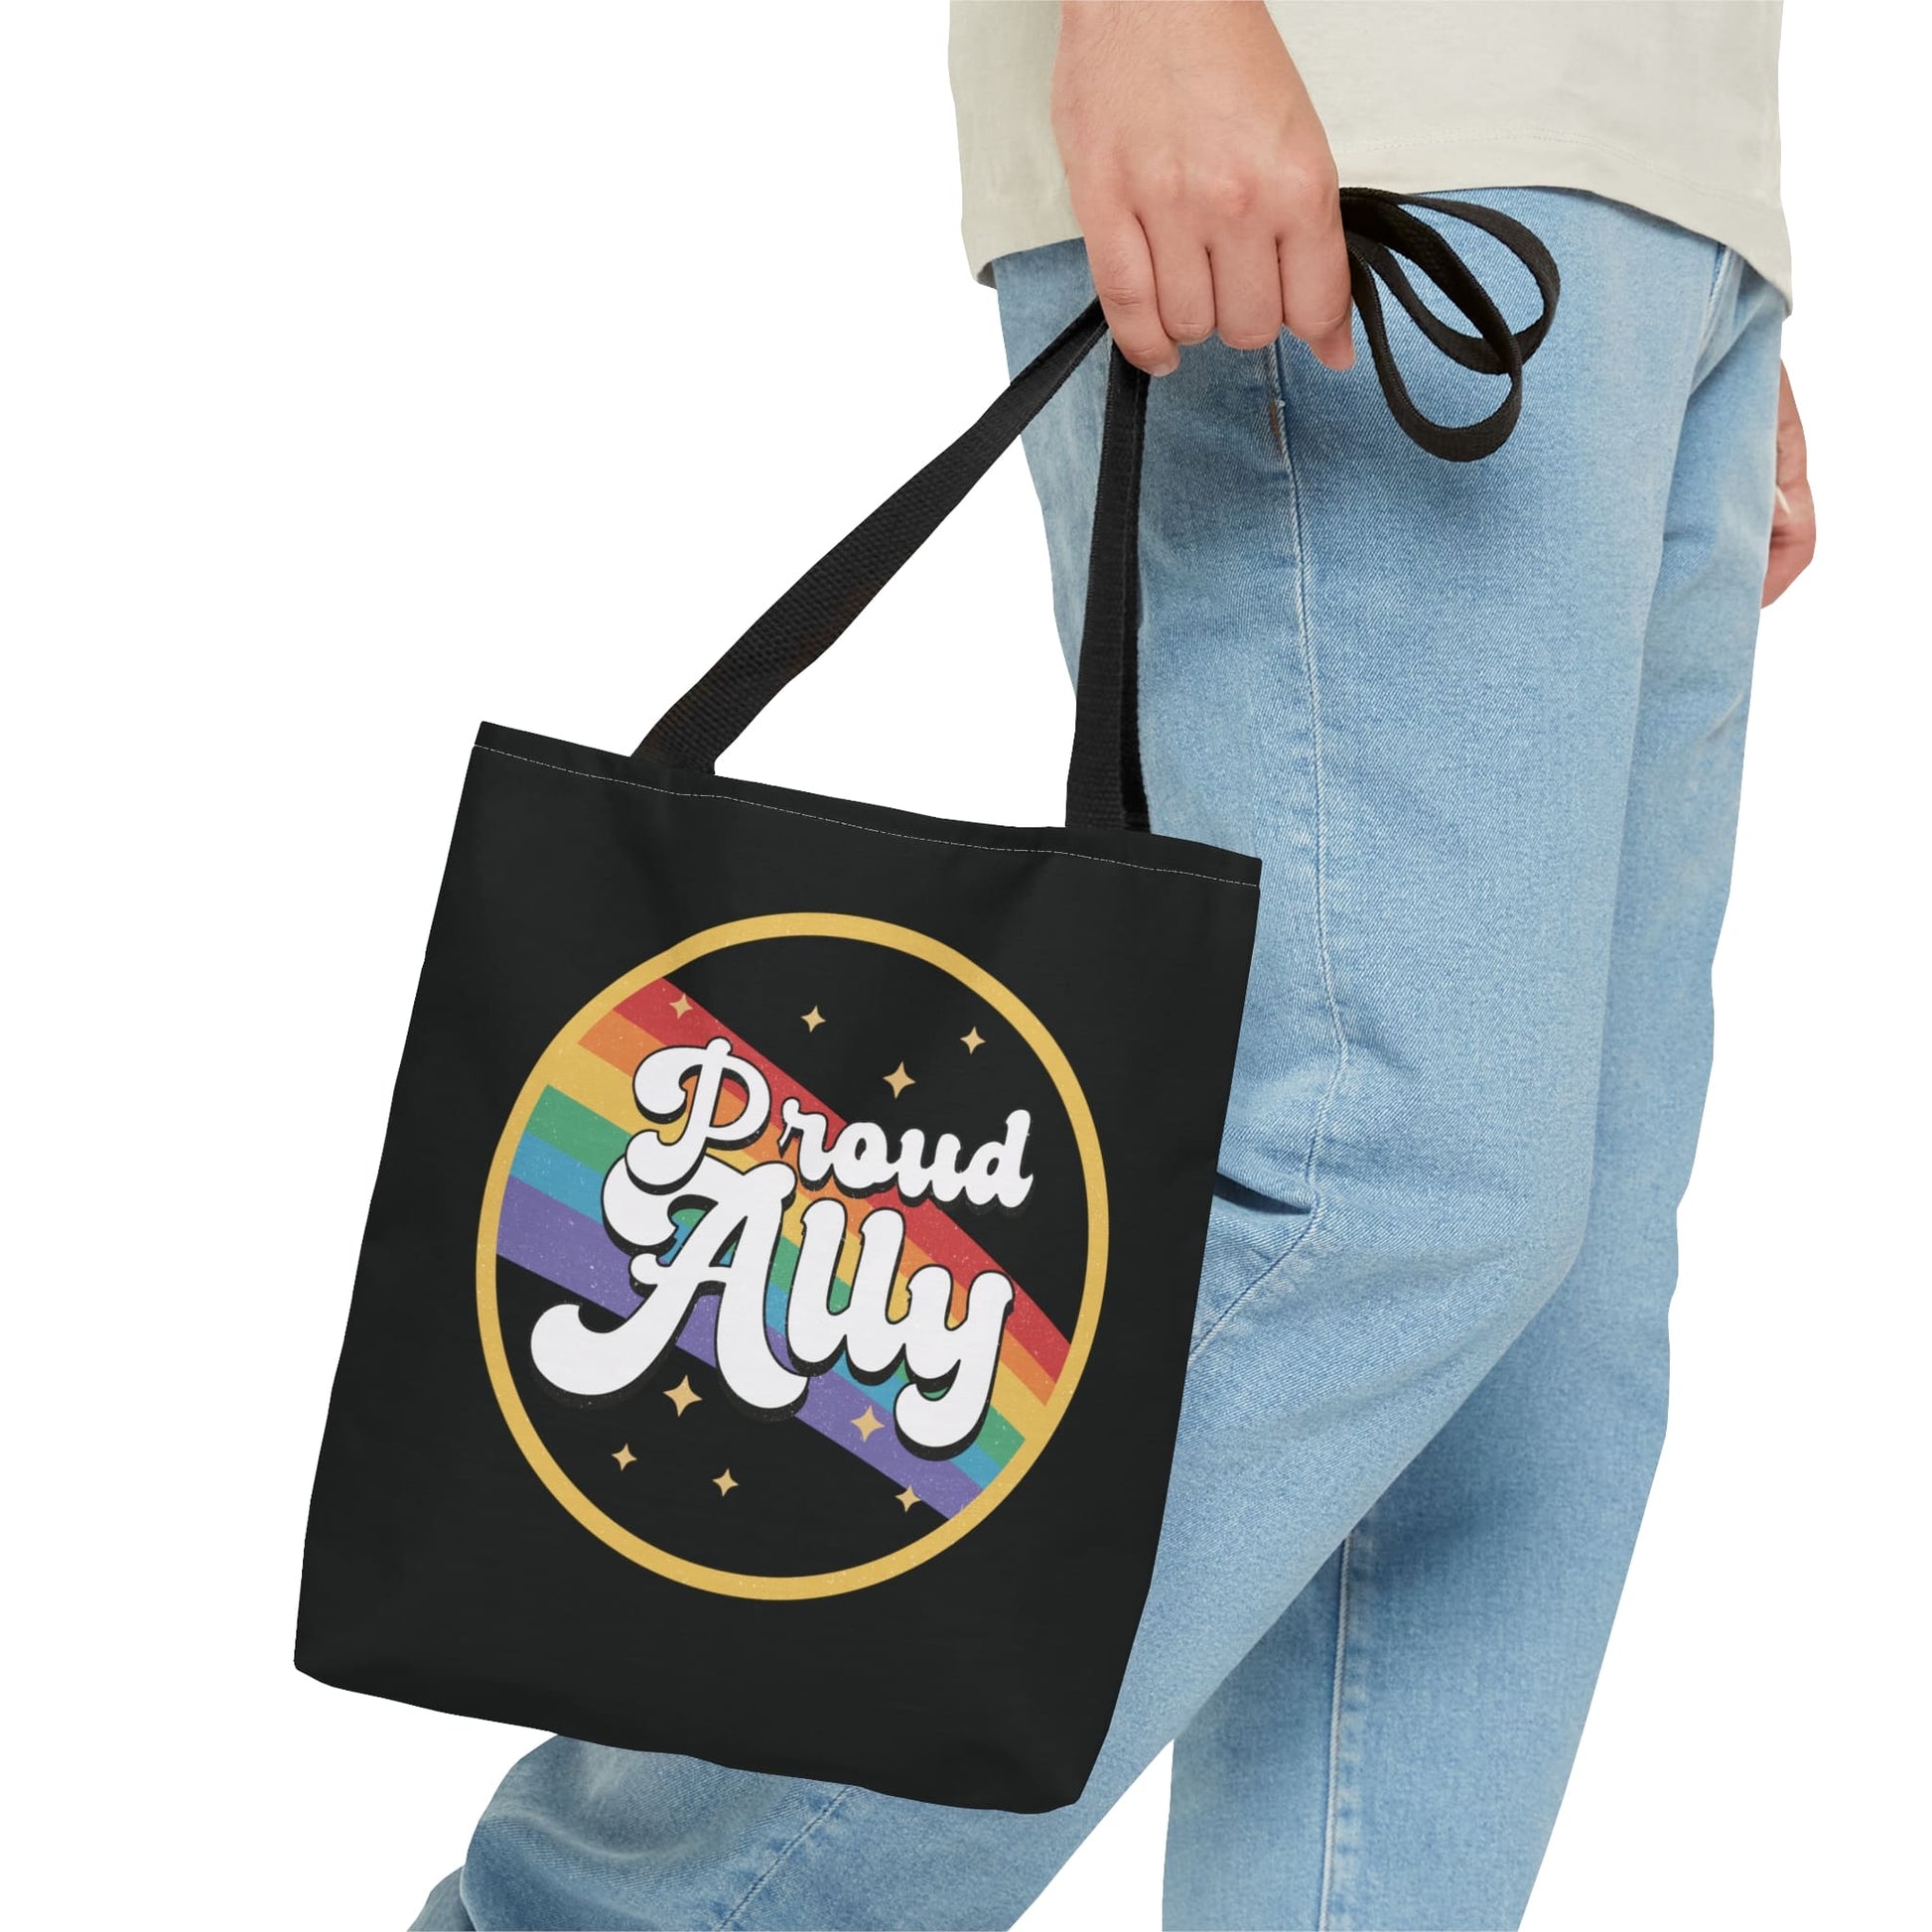 LGBT ally pride tote bag, small